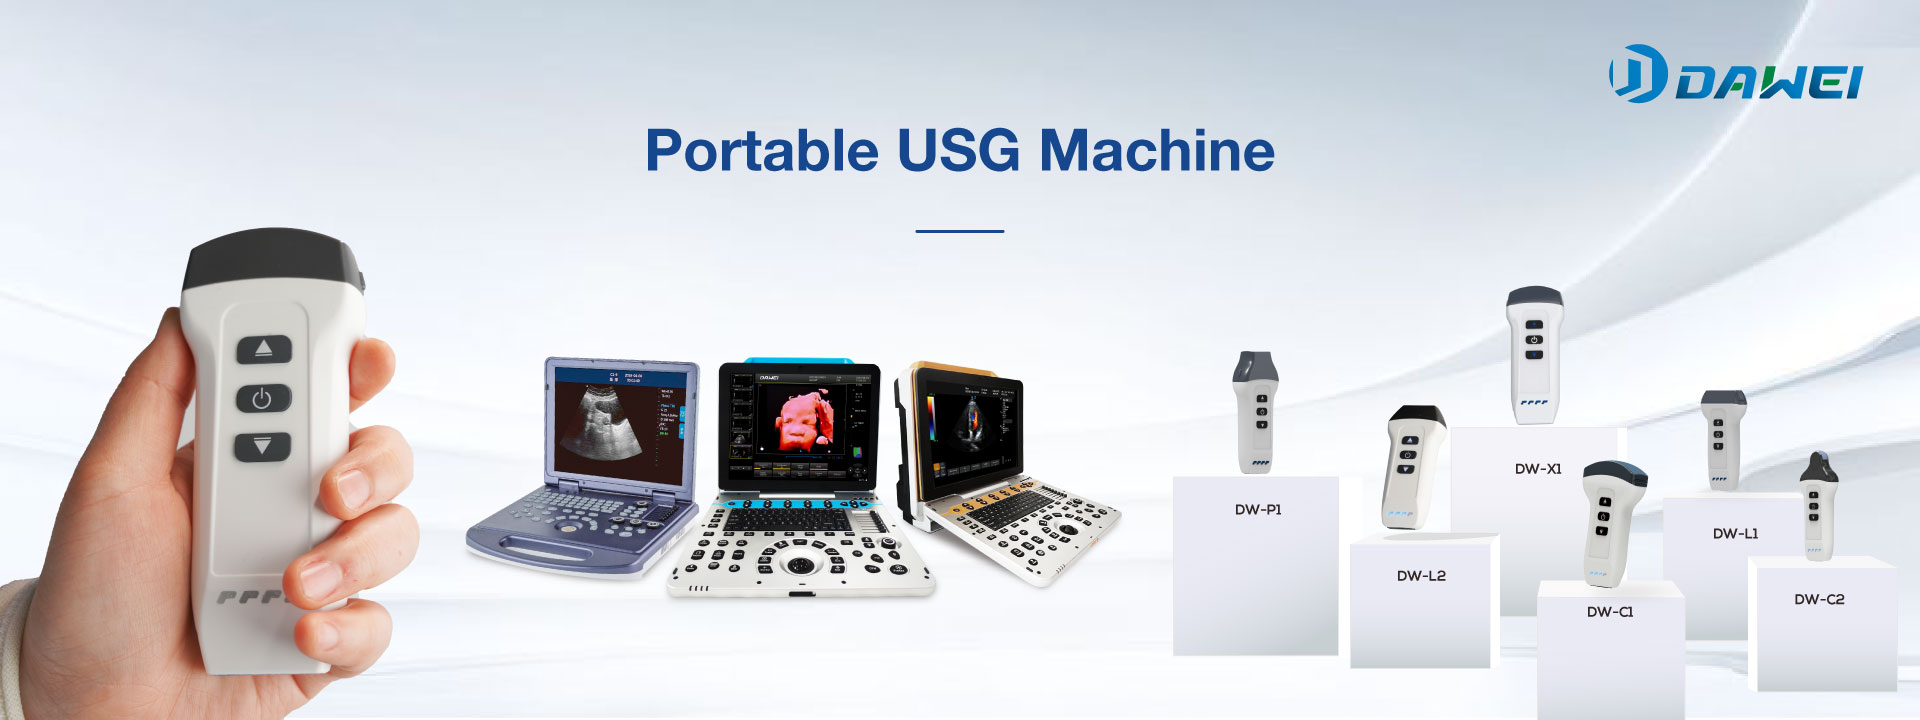 Affordable Portable USG Machines